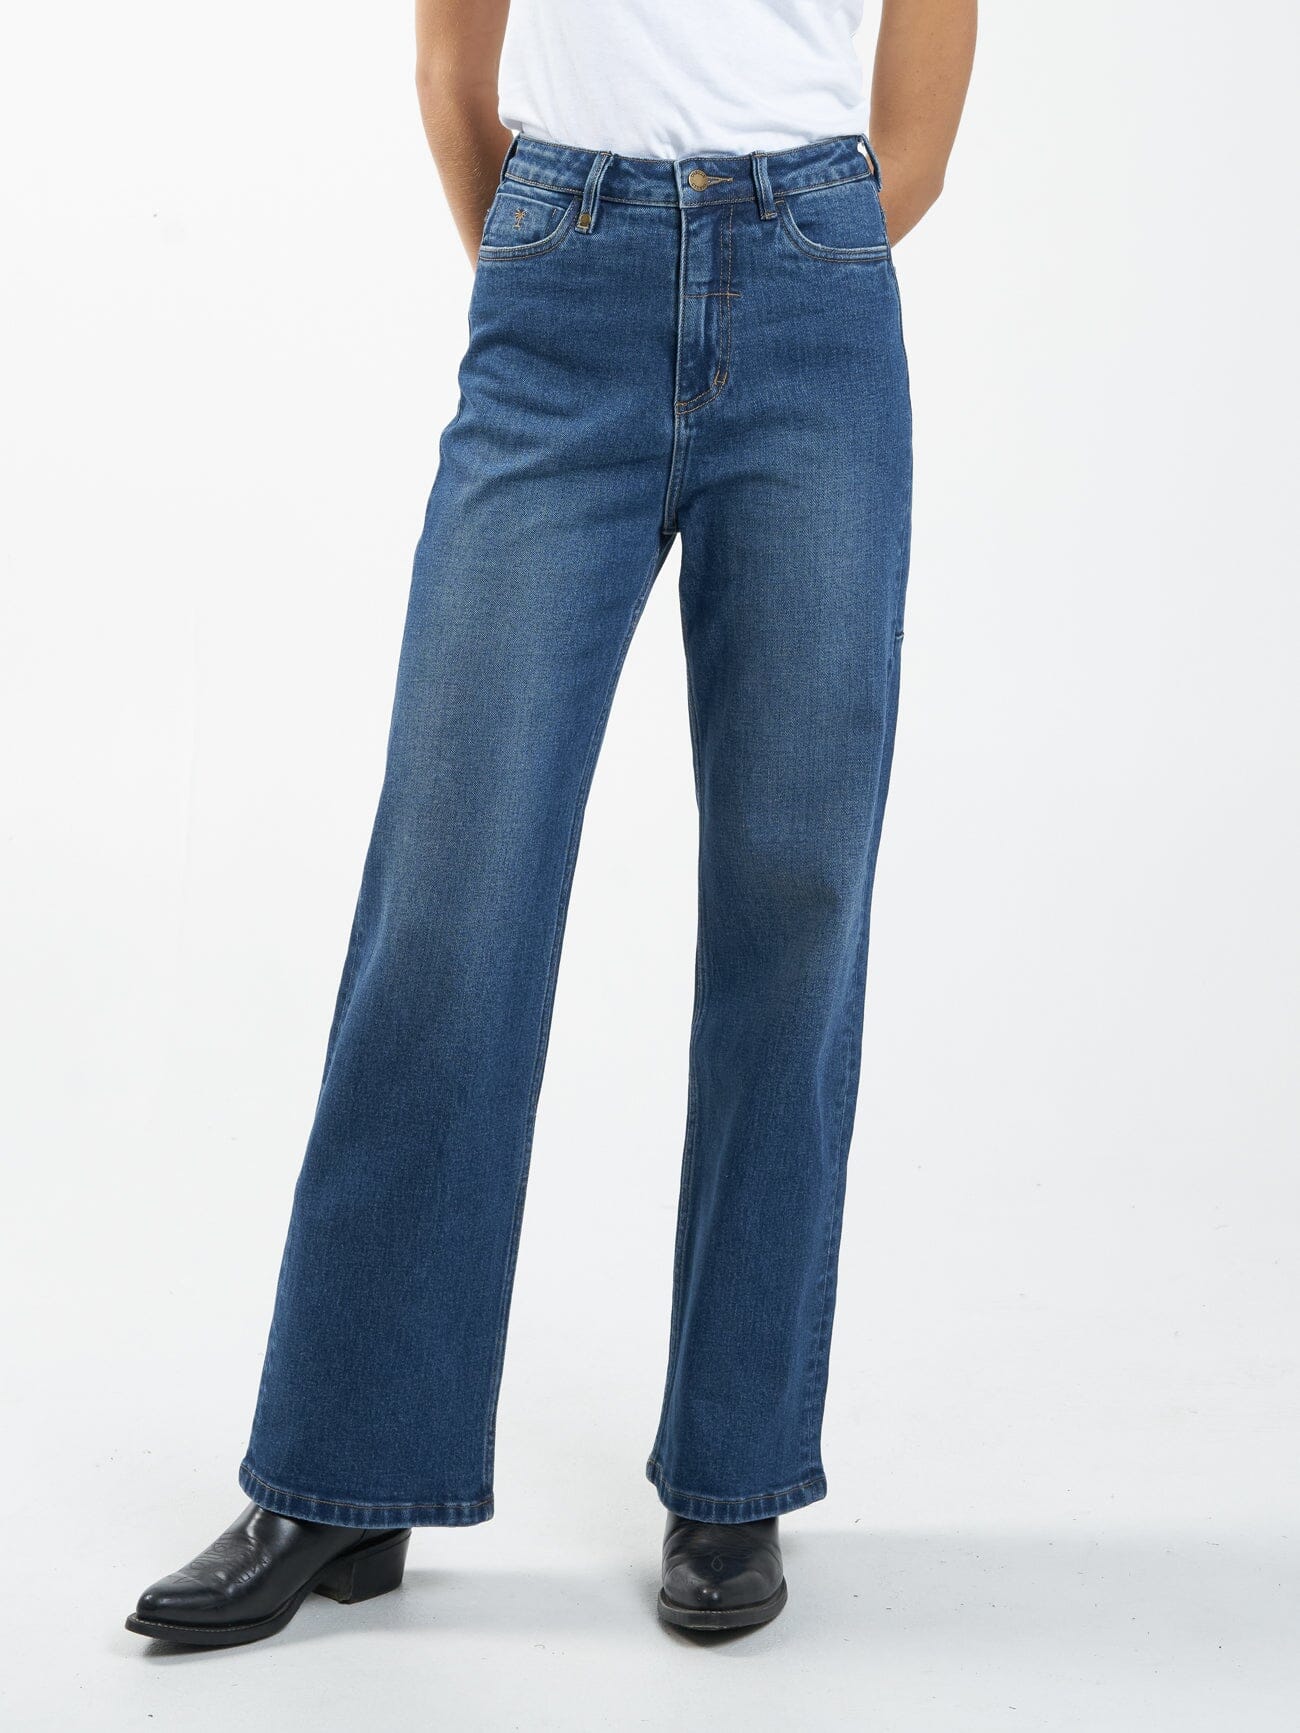 Womens High Waisted Jeans